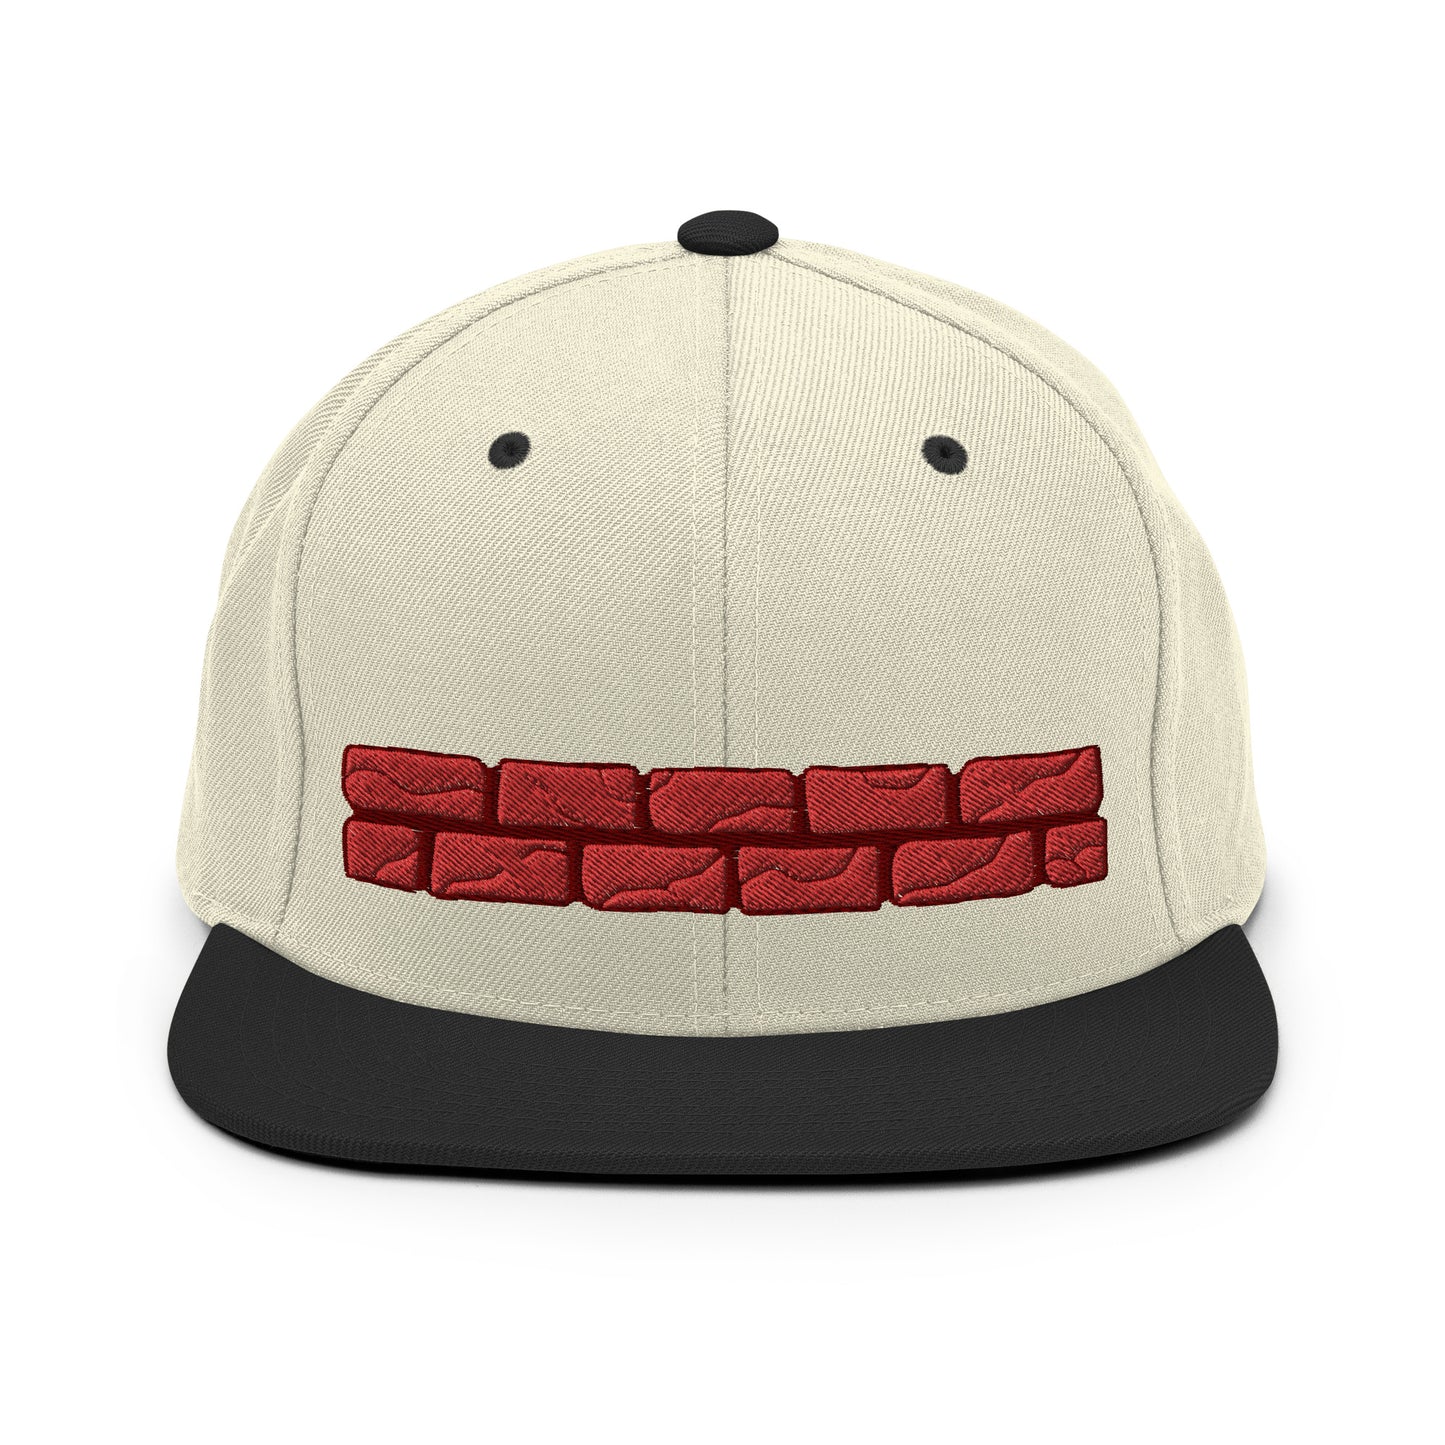 Brick Wall Peeker snapback hat